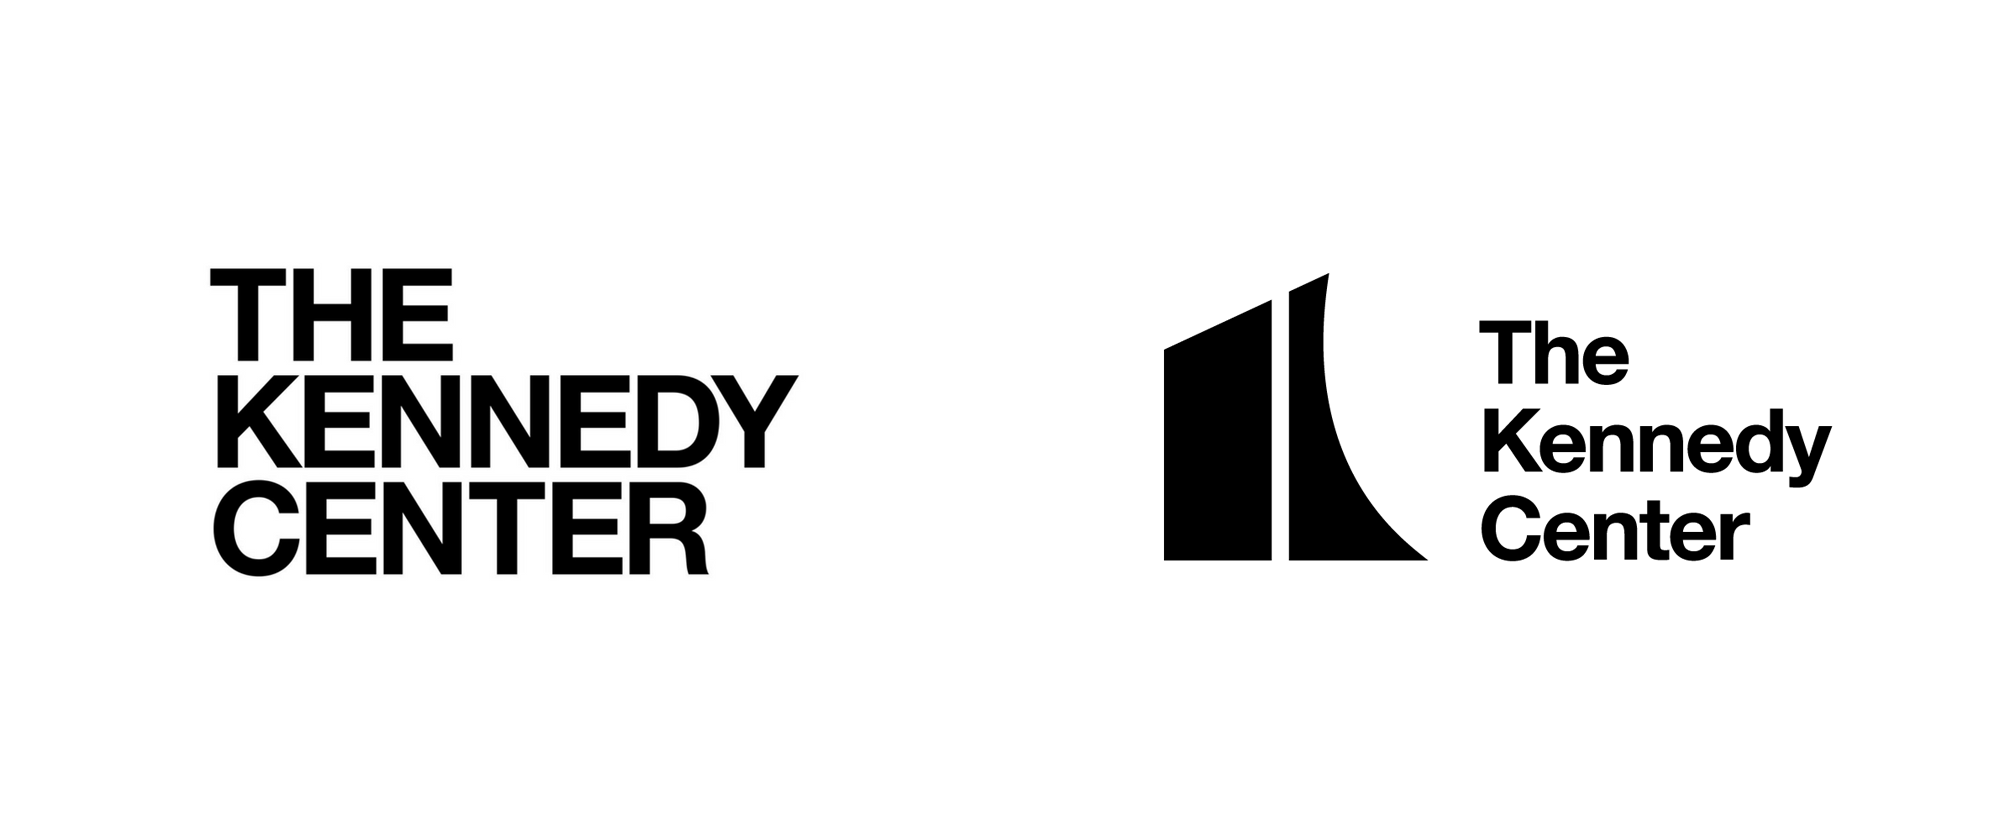 Kennedy Logo - Brand New: New Logo for The Kennedy Center